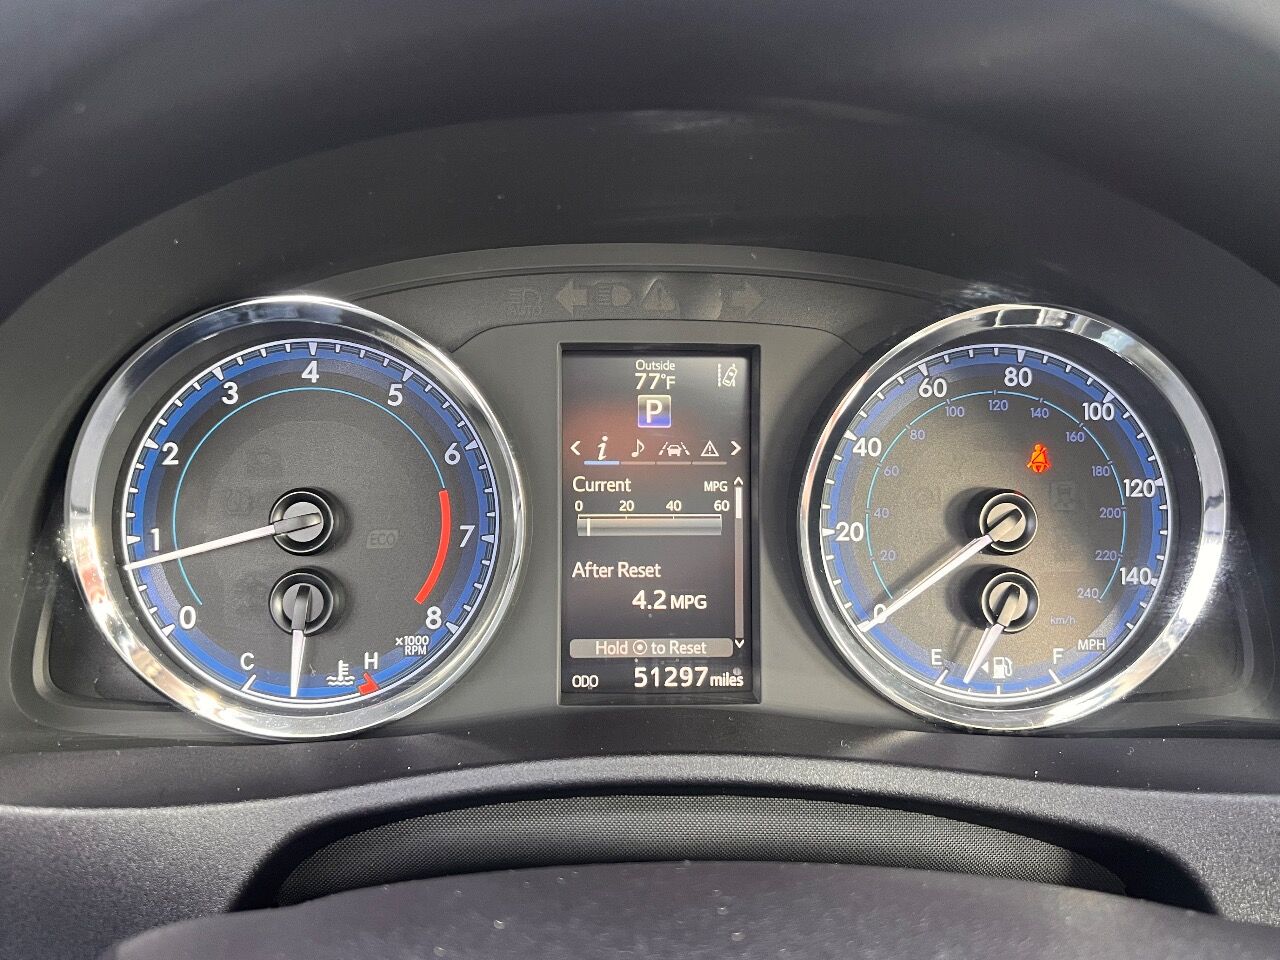 2018 TOYOTA Corolla Sedan - $15,850